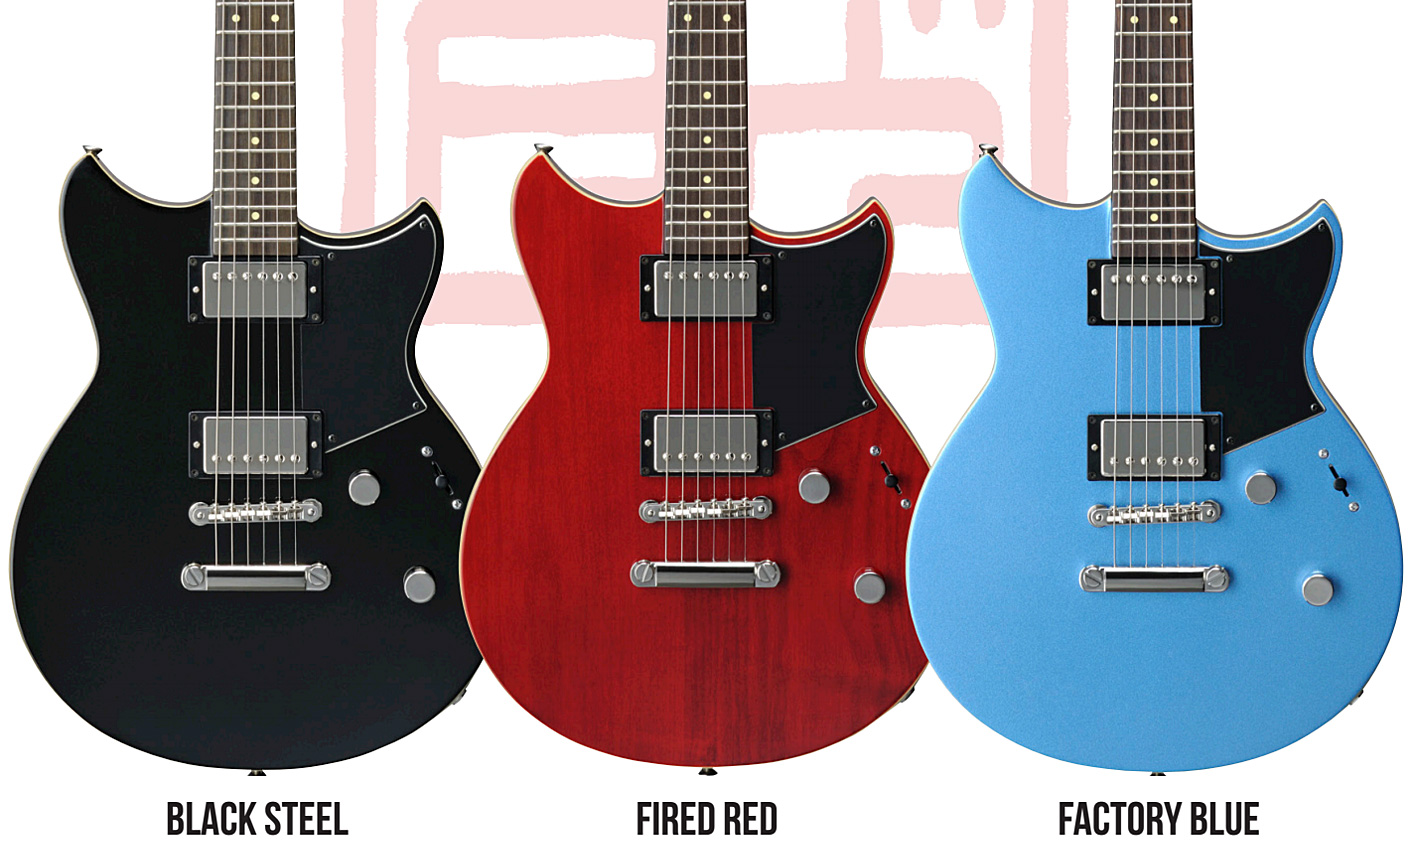 Yamaha Revstar Rs420 - Fired Red - Double Cut E-Gitarre - Variation 2